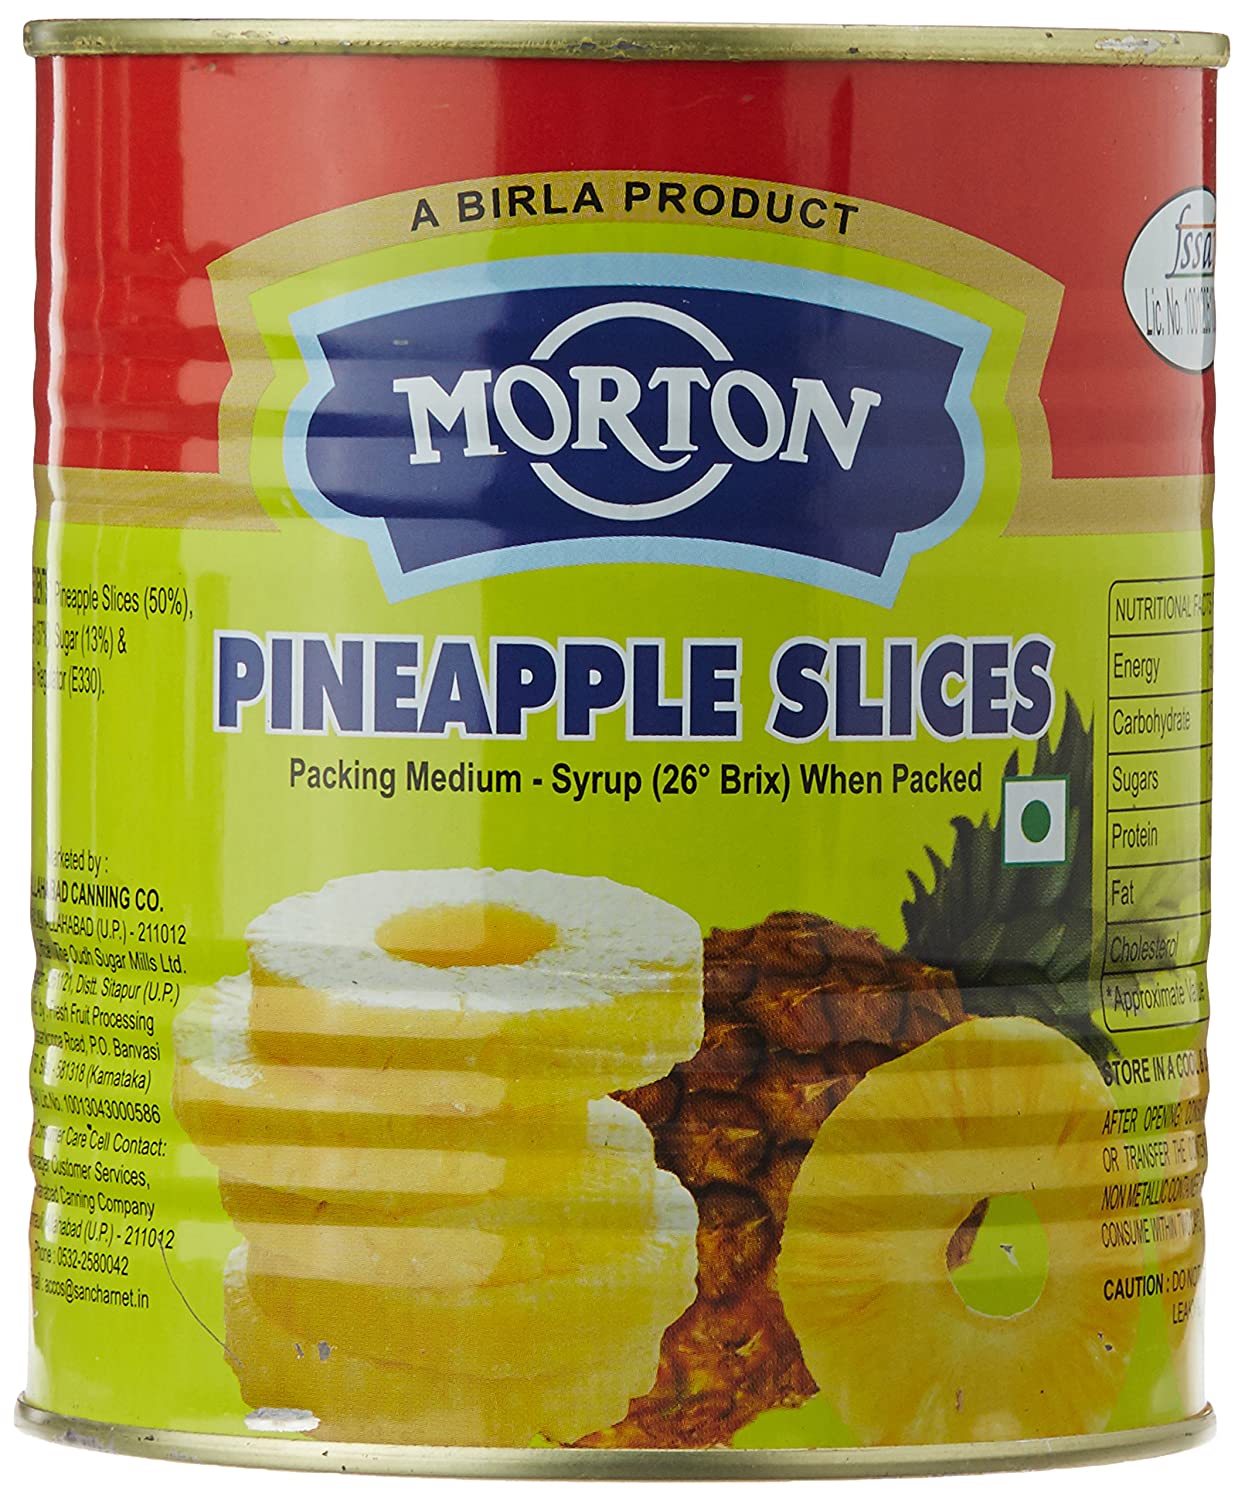 Morton Pineapple Slice Image